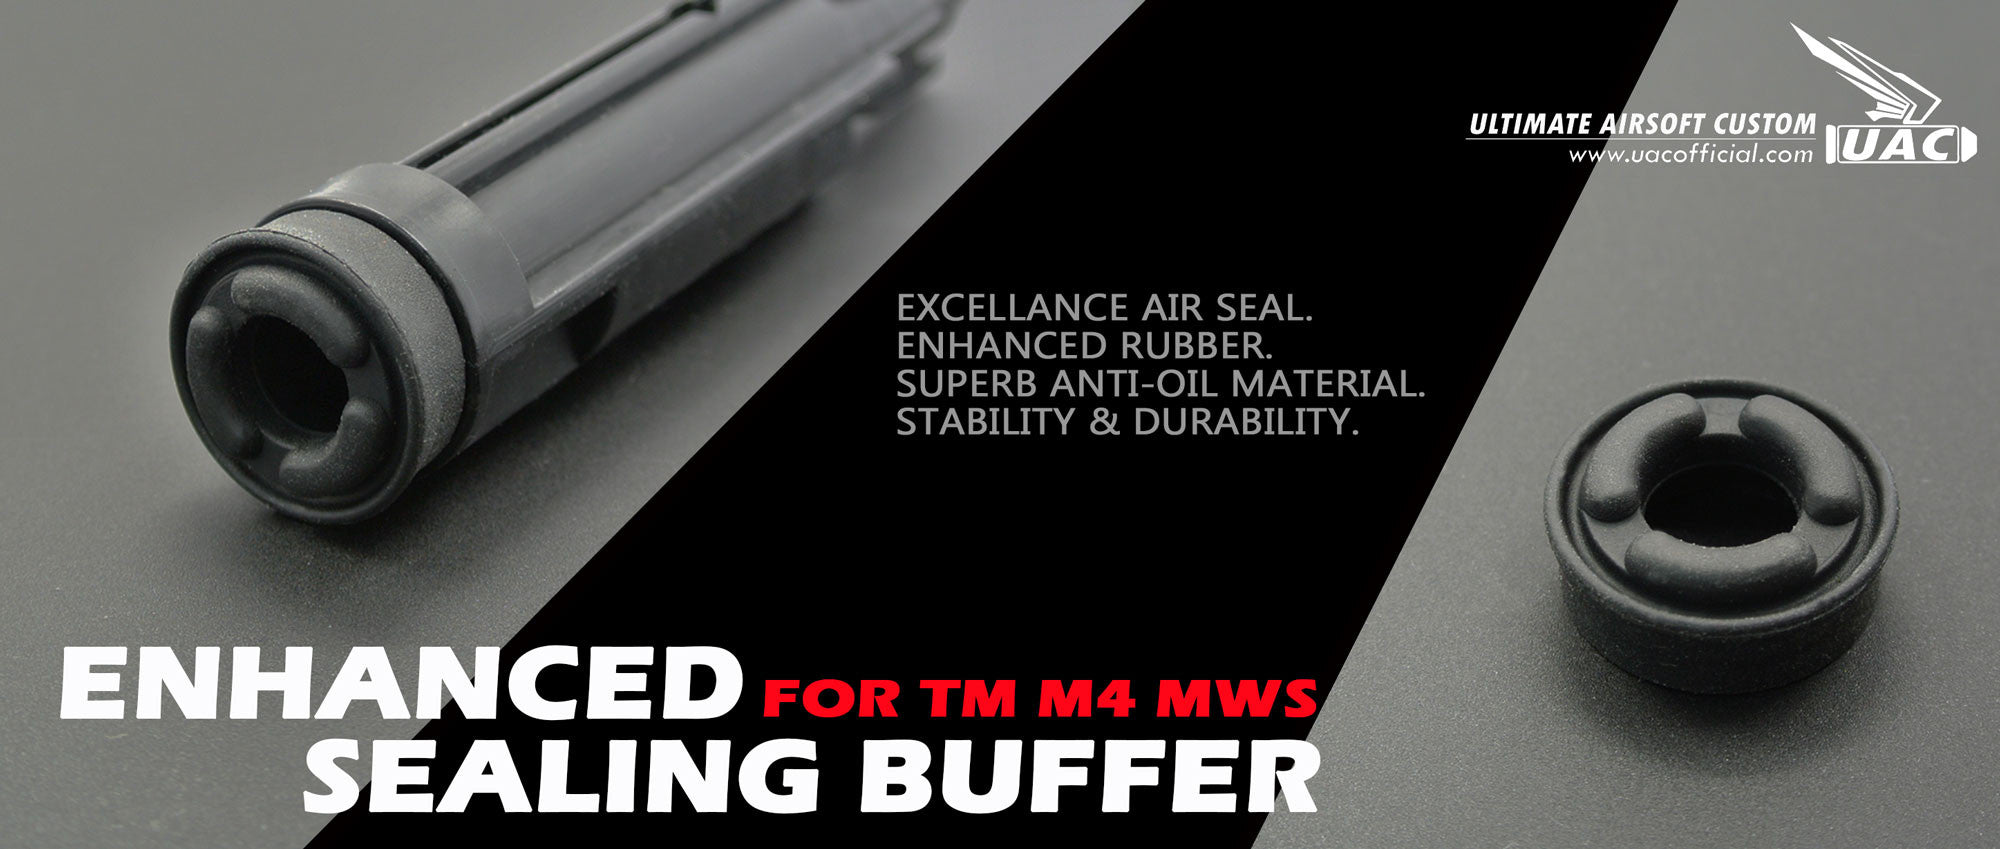 DP Enhanced Sealing Buffer For TM M4A1 MWS